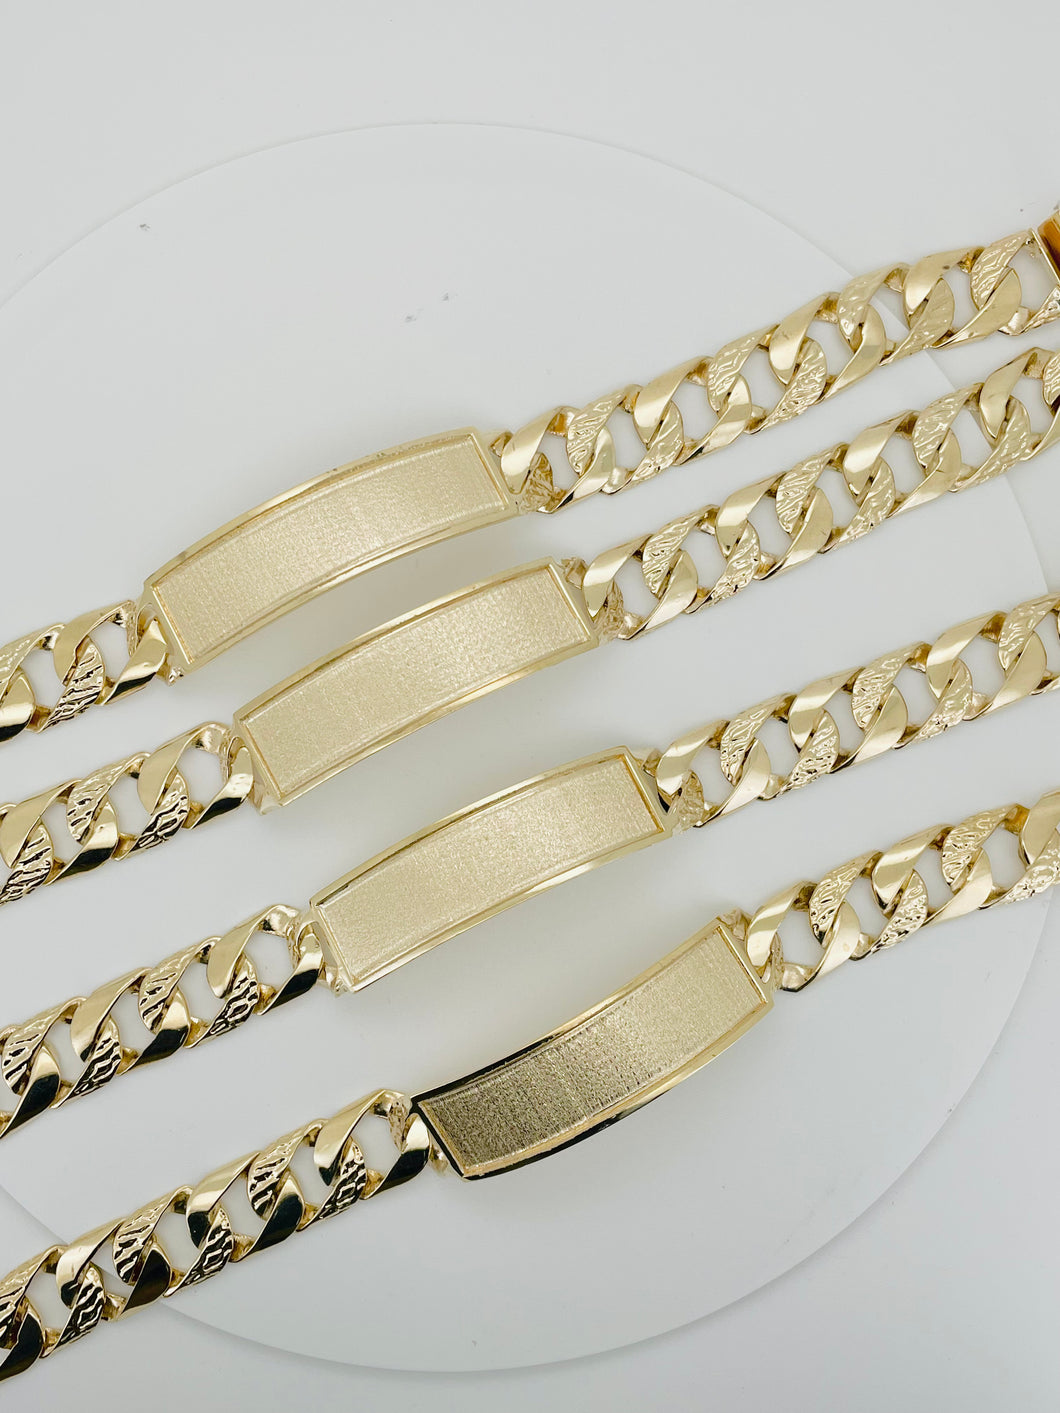 10 karat gold bracelet (13mm)with ID name